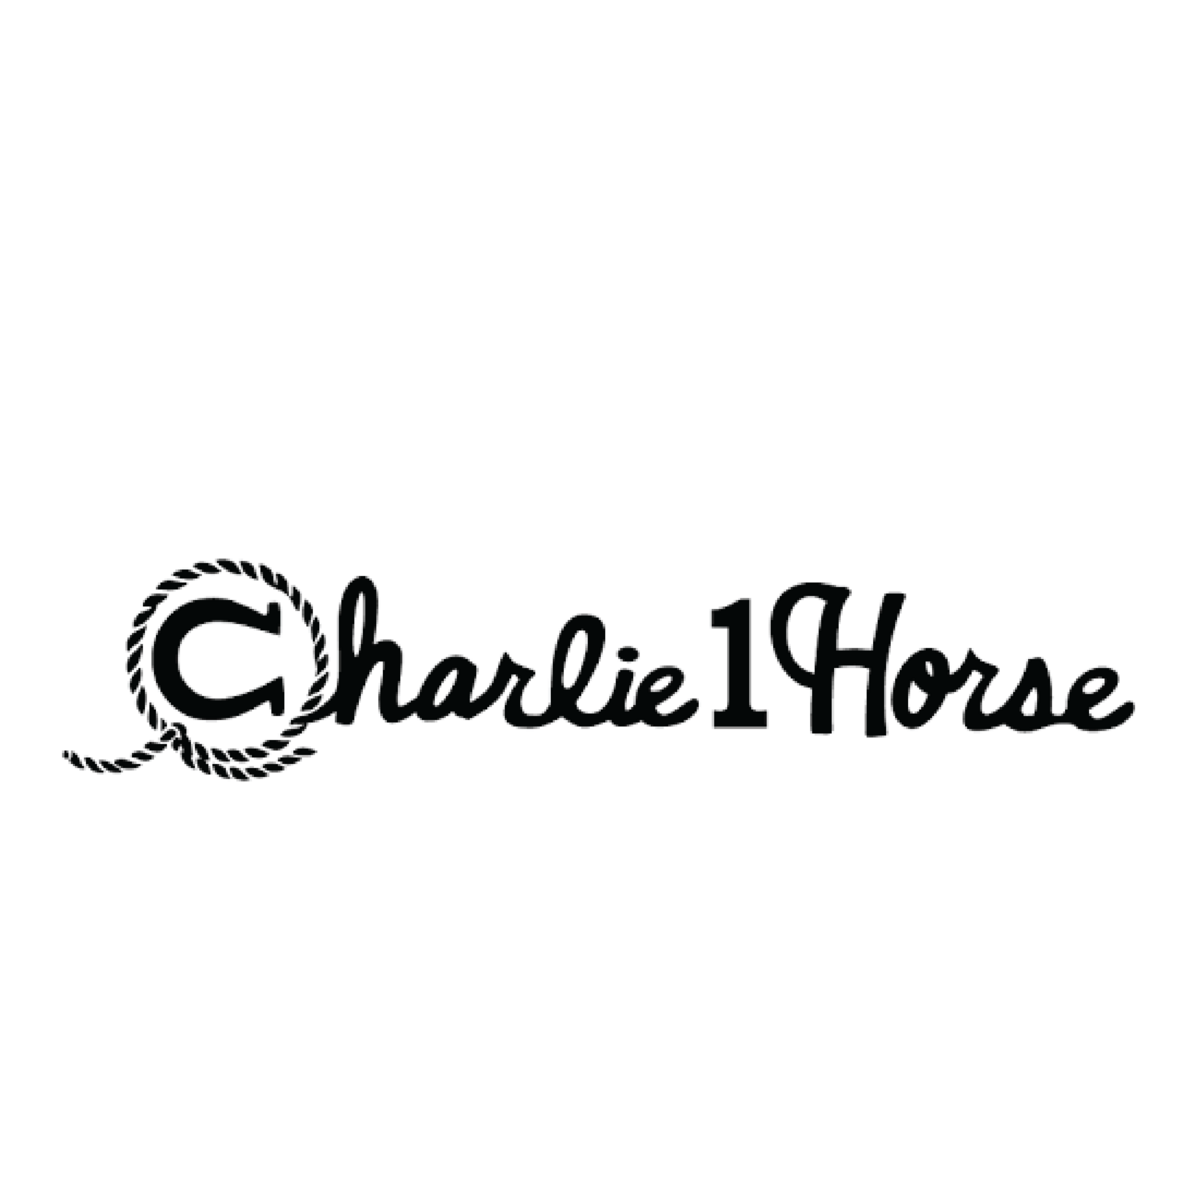 Charlie 1 horse